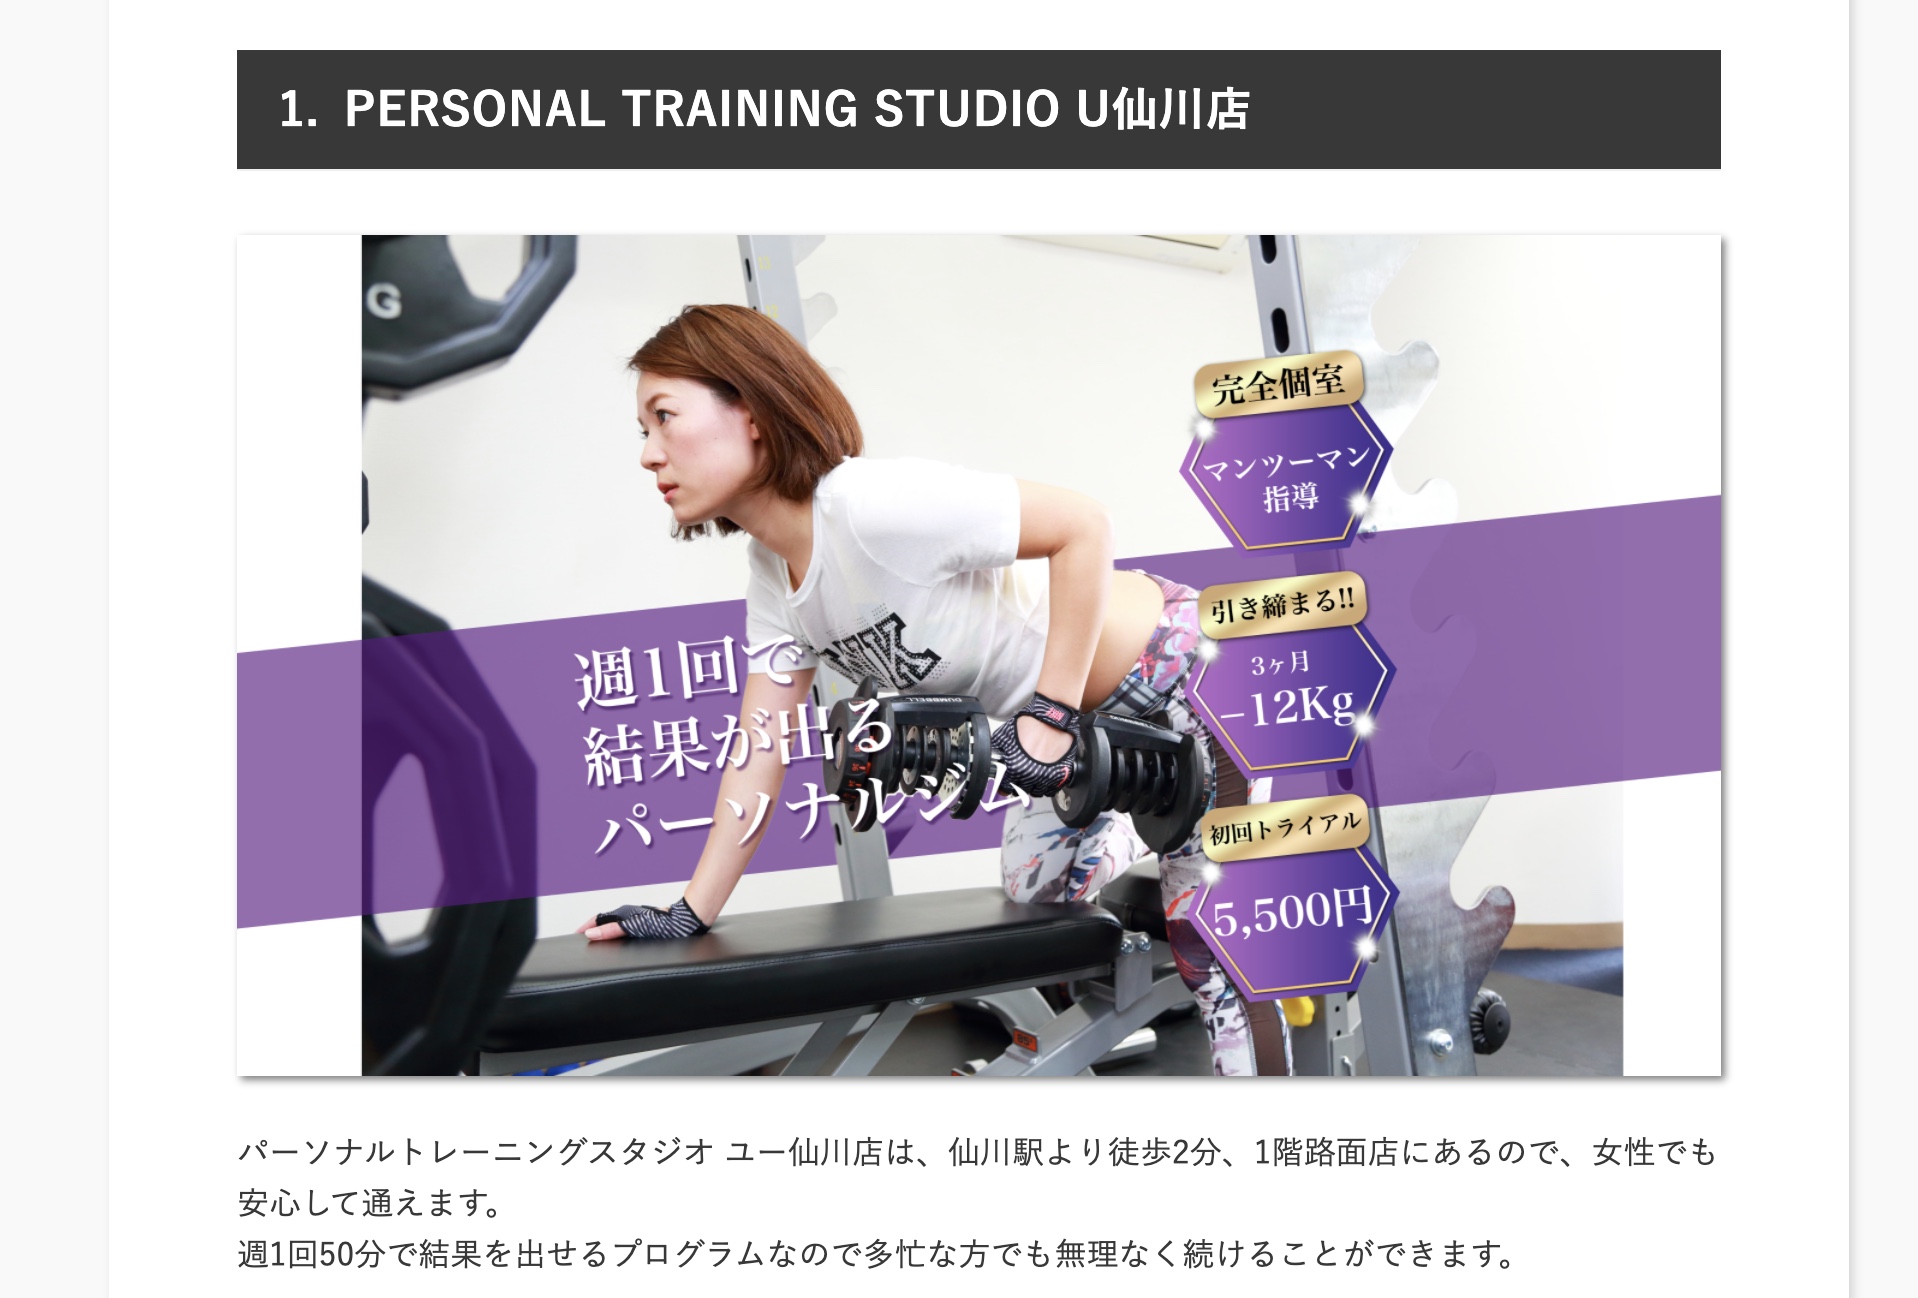 PERSONAL TRAINING STUDIO U 仙川店がフィットネスメディアIDEL様に掲載されました